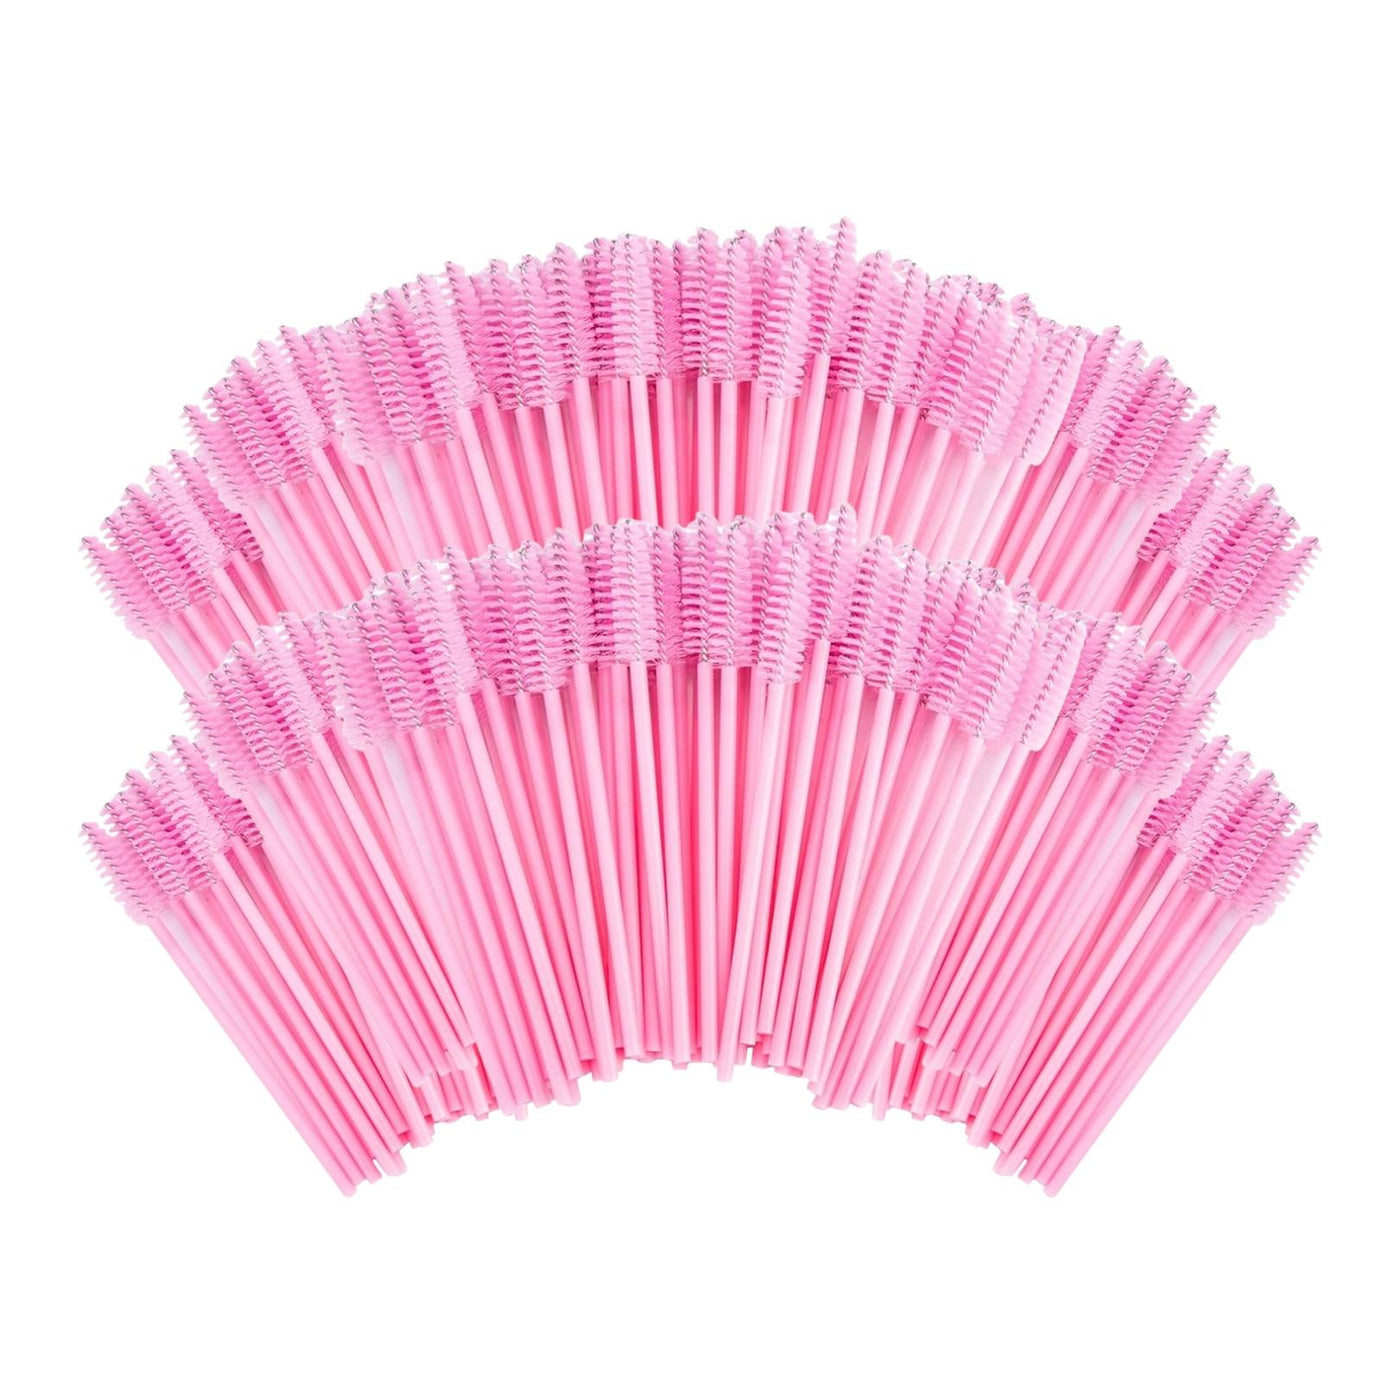 Mascara Wands Pink - 10 Pack